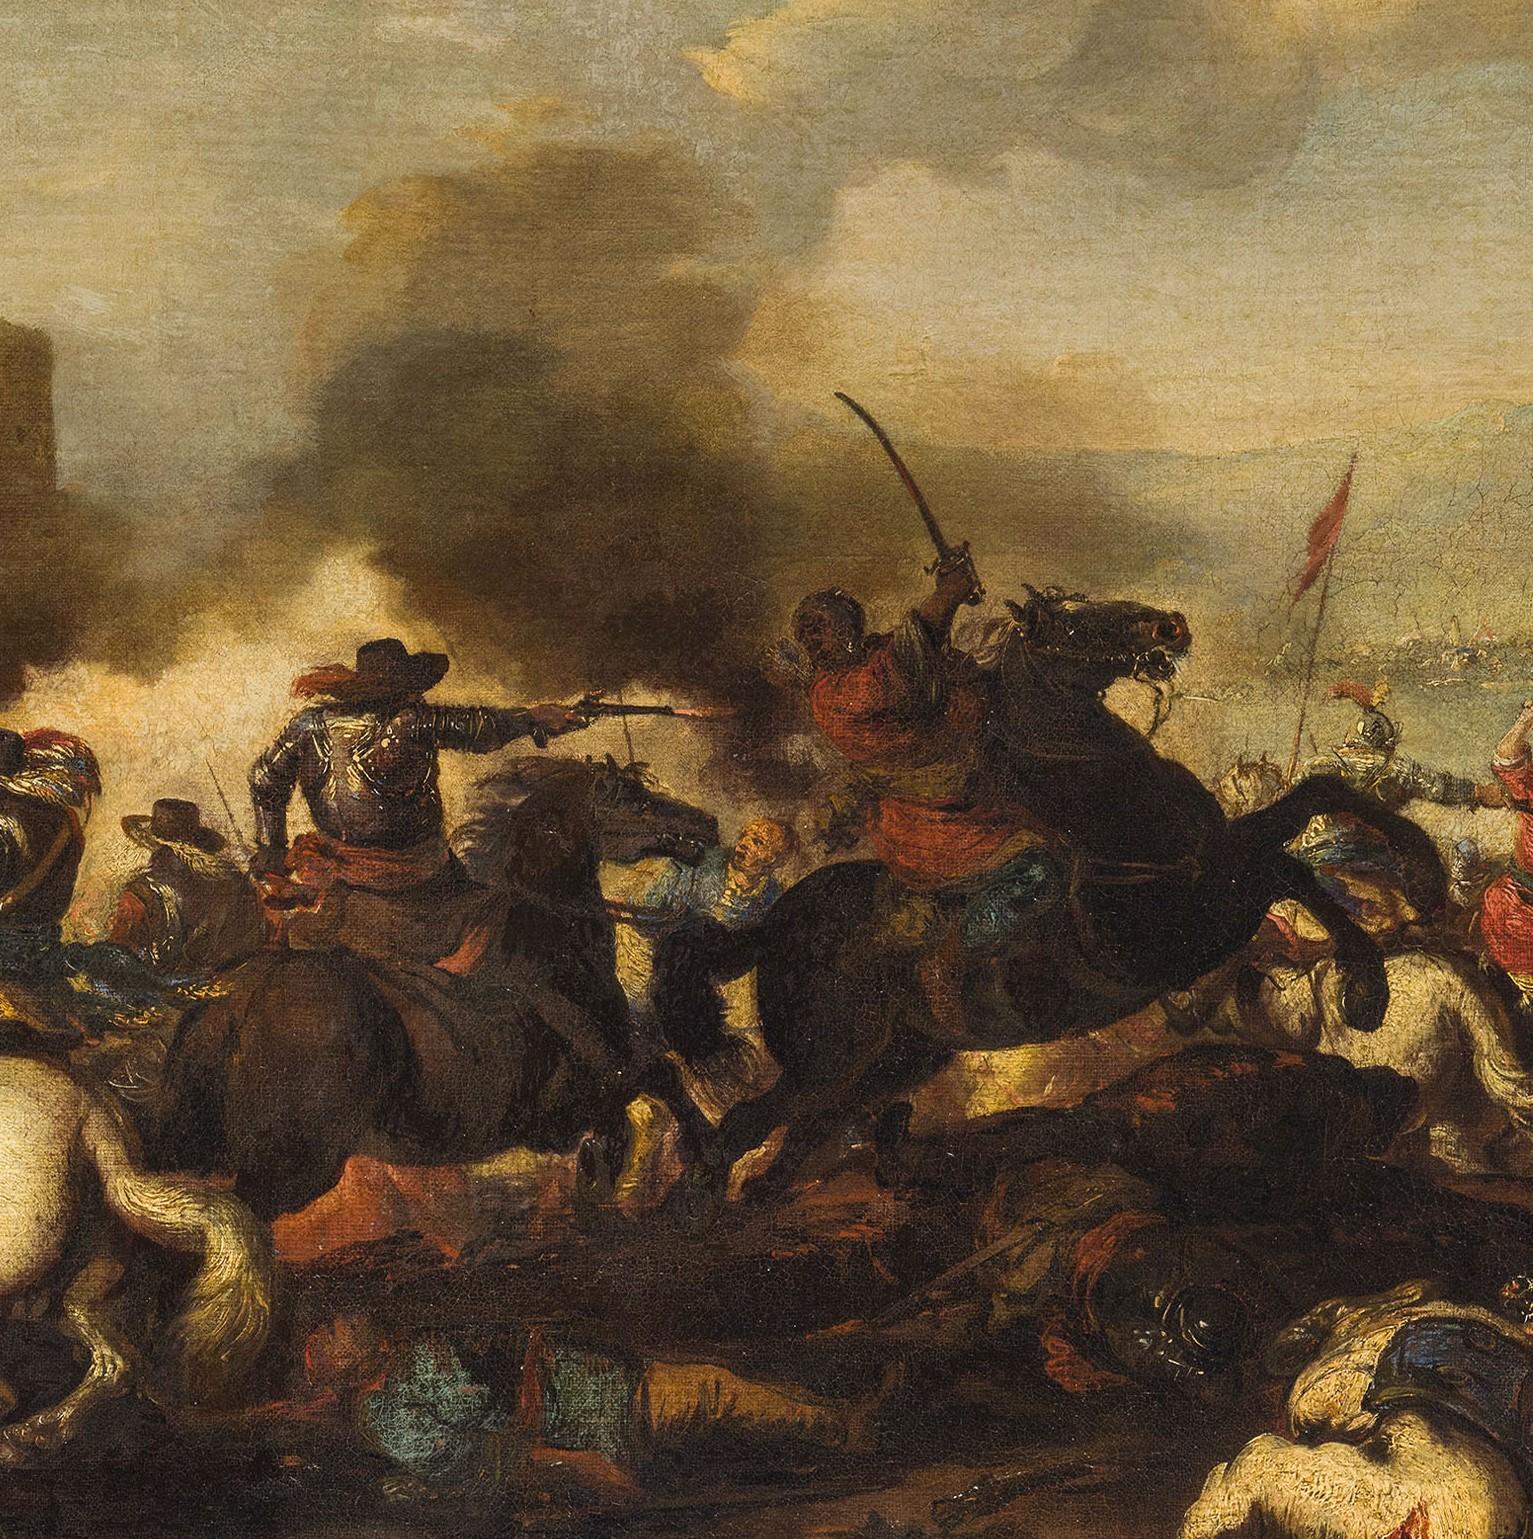 18th century battle paintings